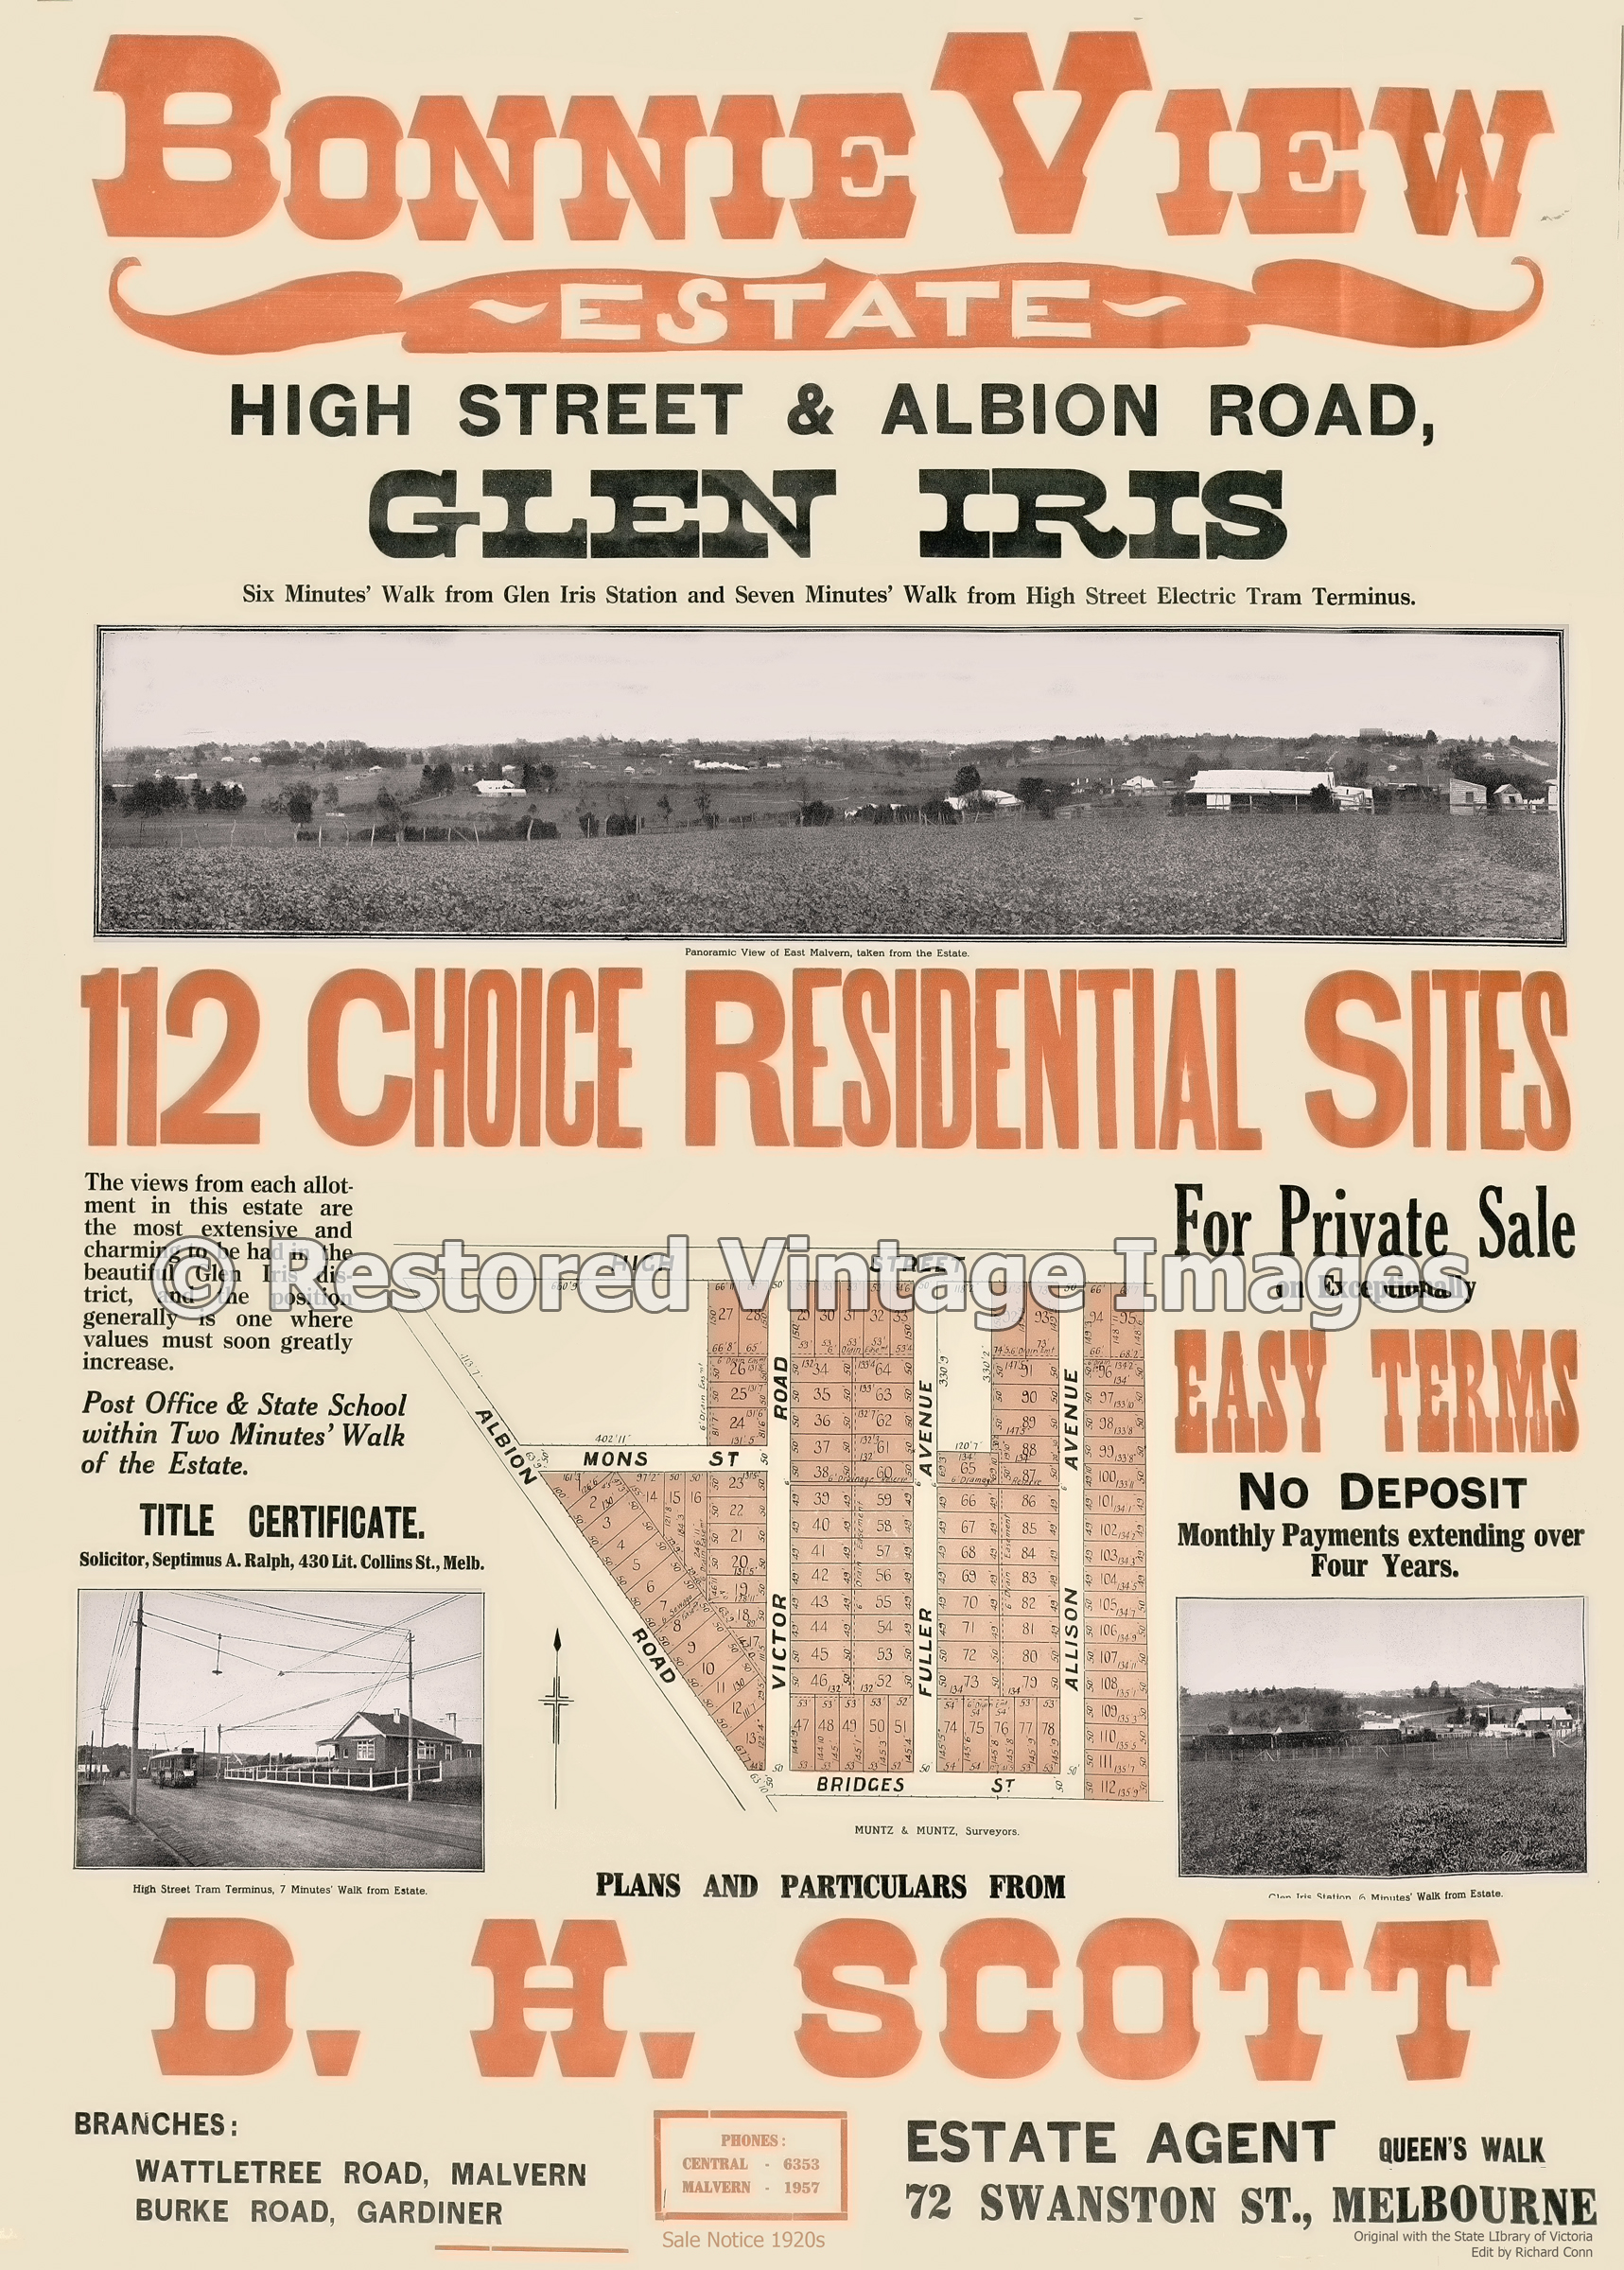 Bonnie View Estate 1920s – Glen Iris